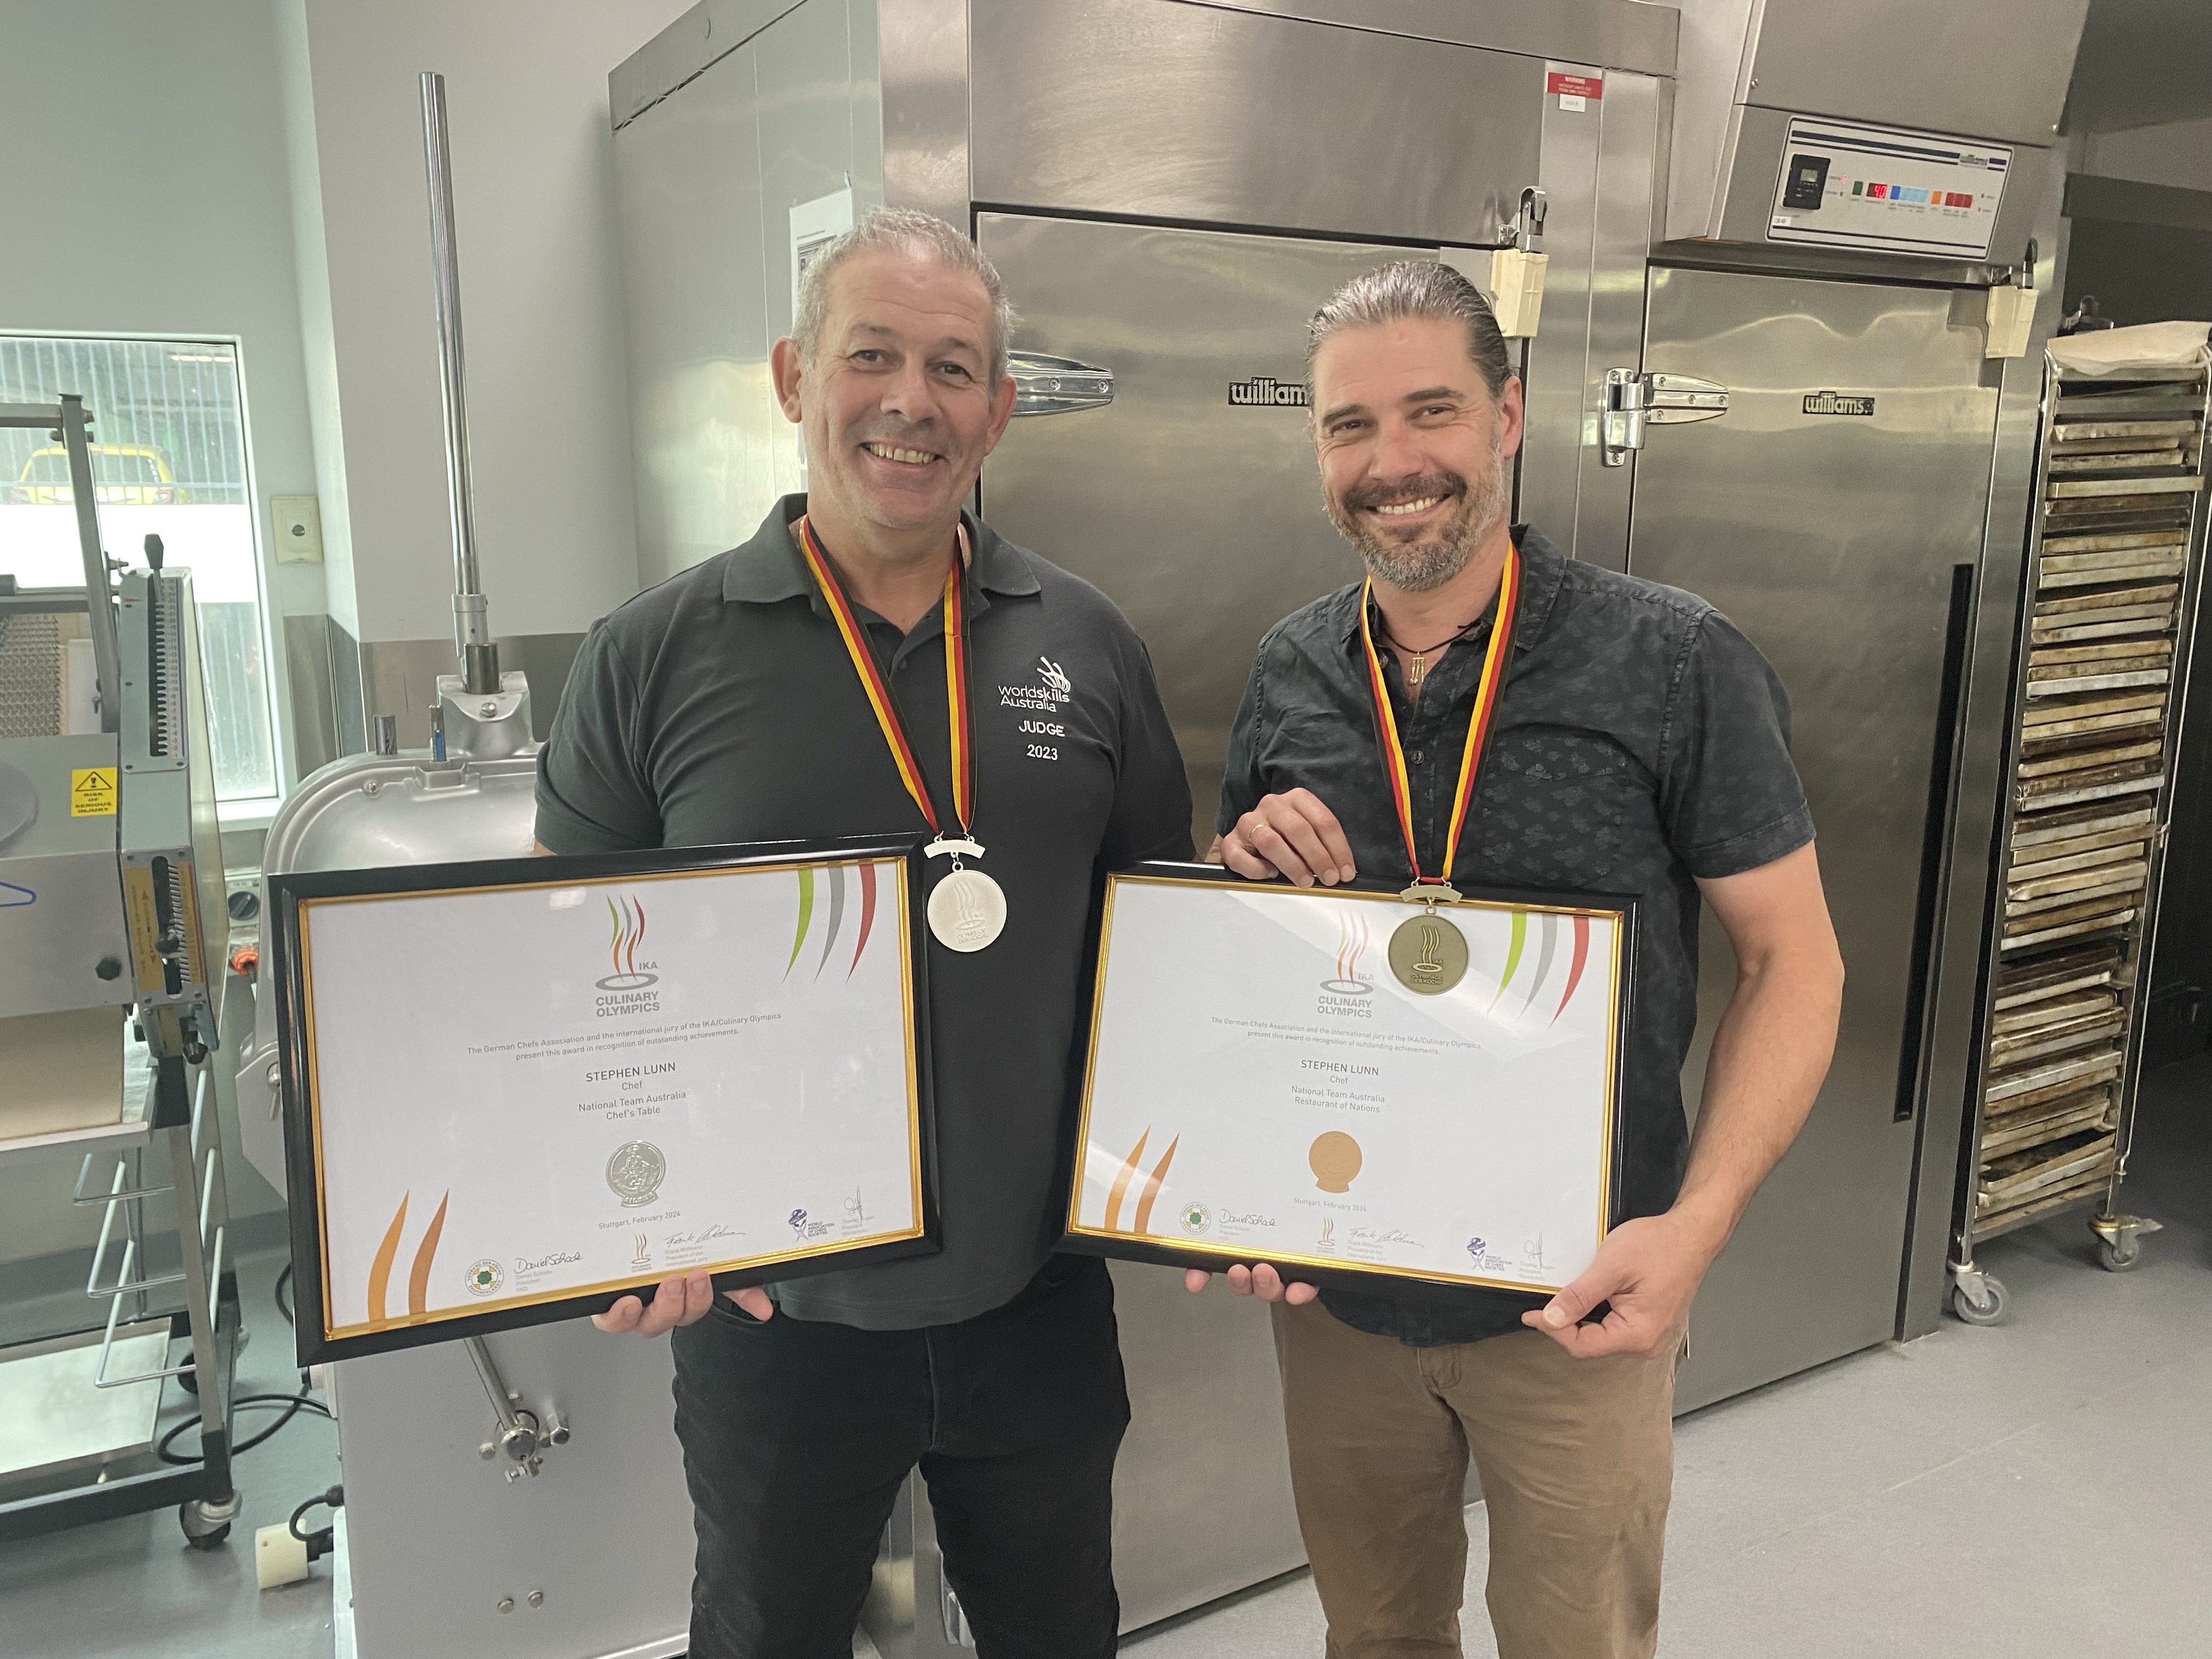 2 men holding framed certificates in the kitchen